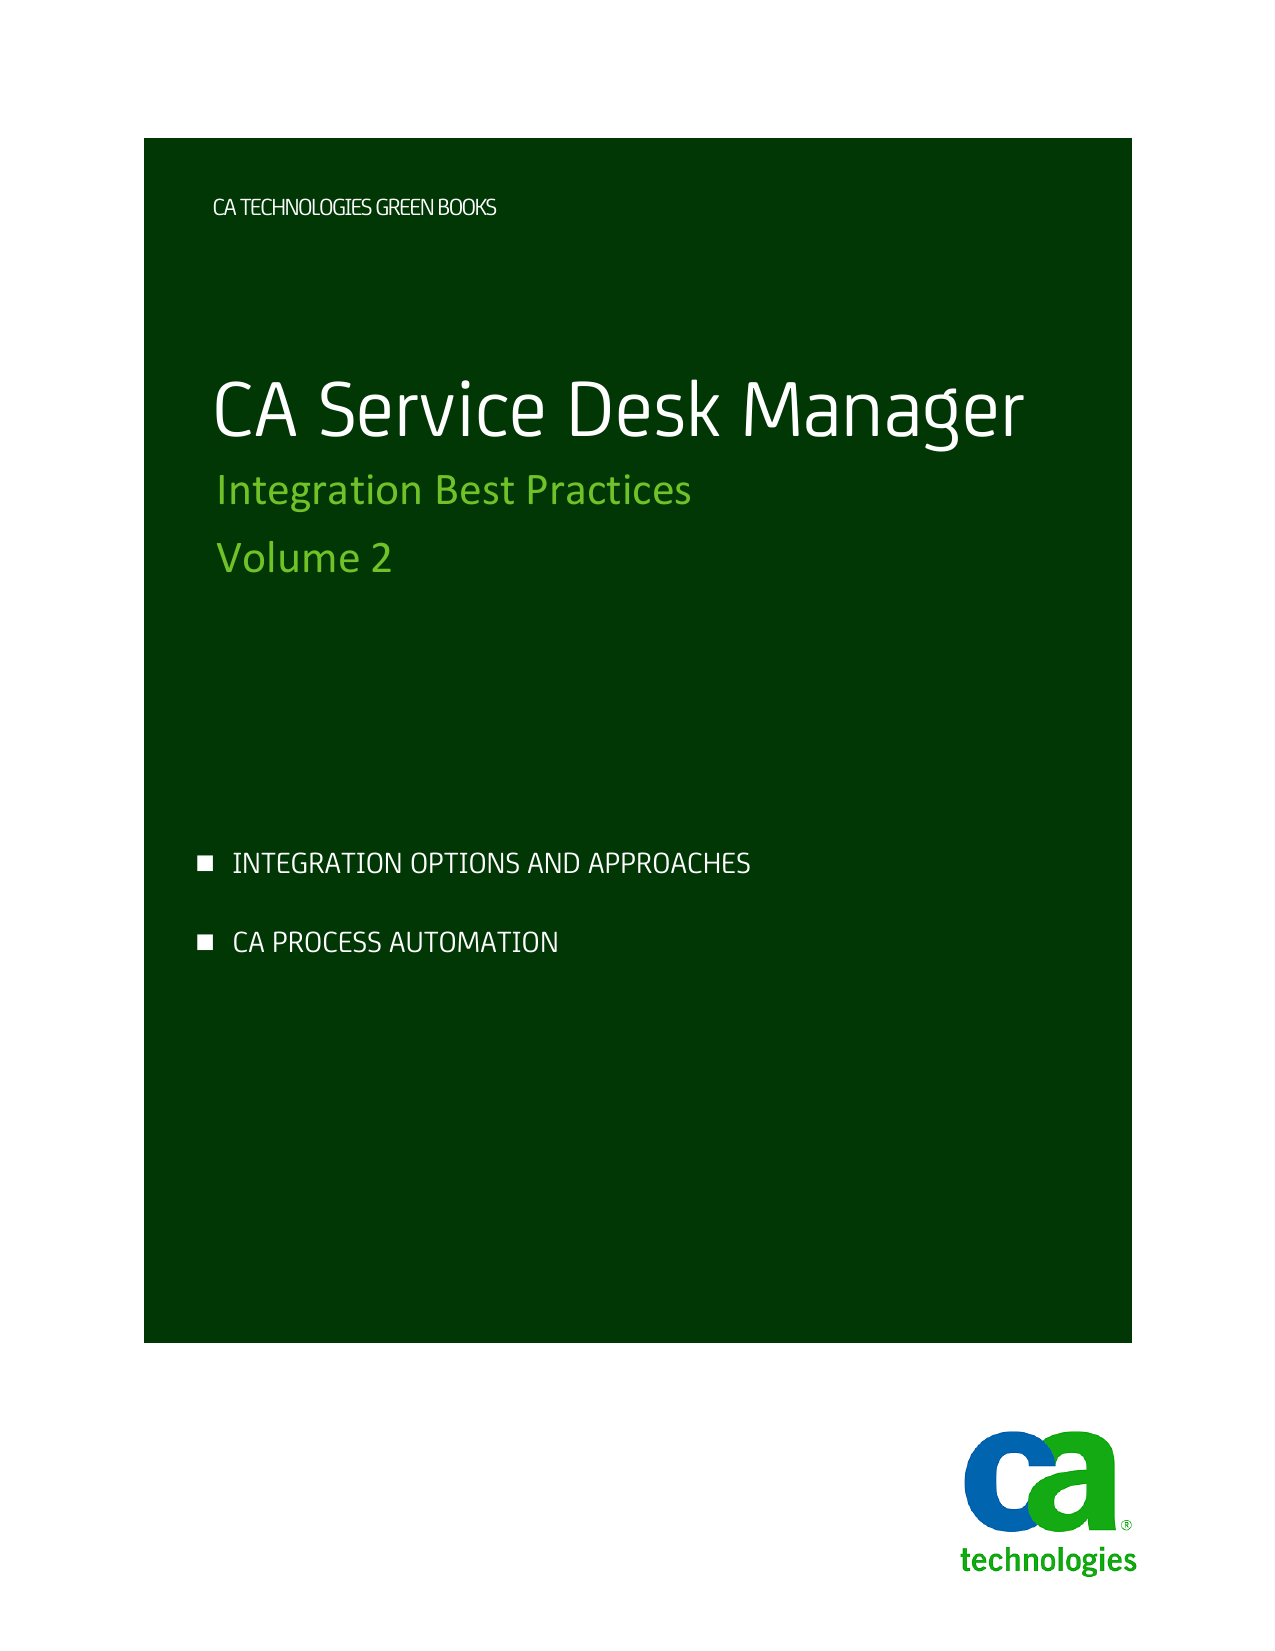 Ca Service Desk Manager Integrations Best Practices Volume 2